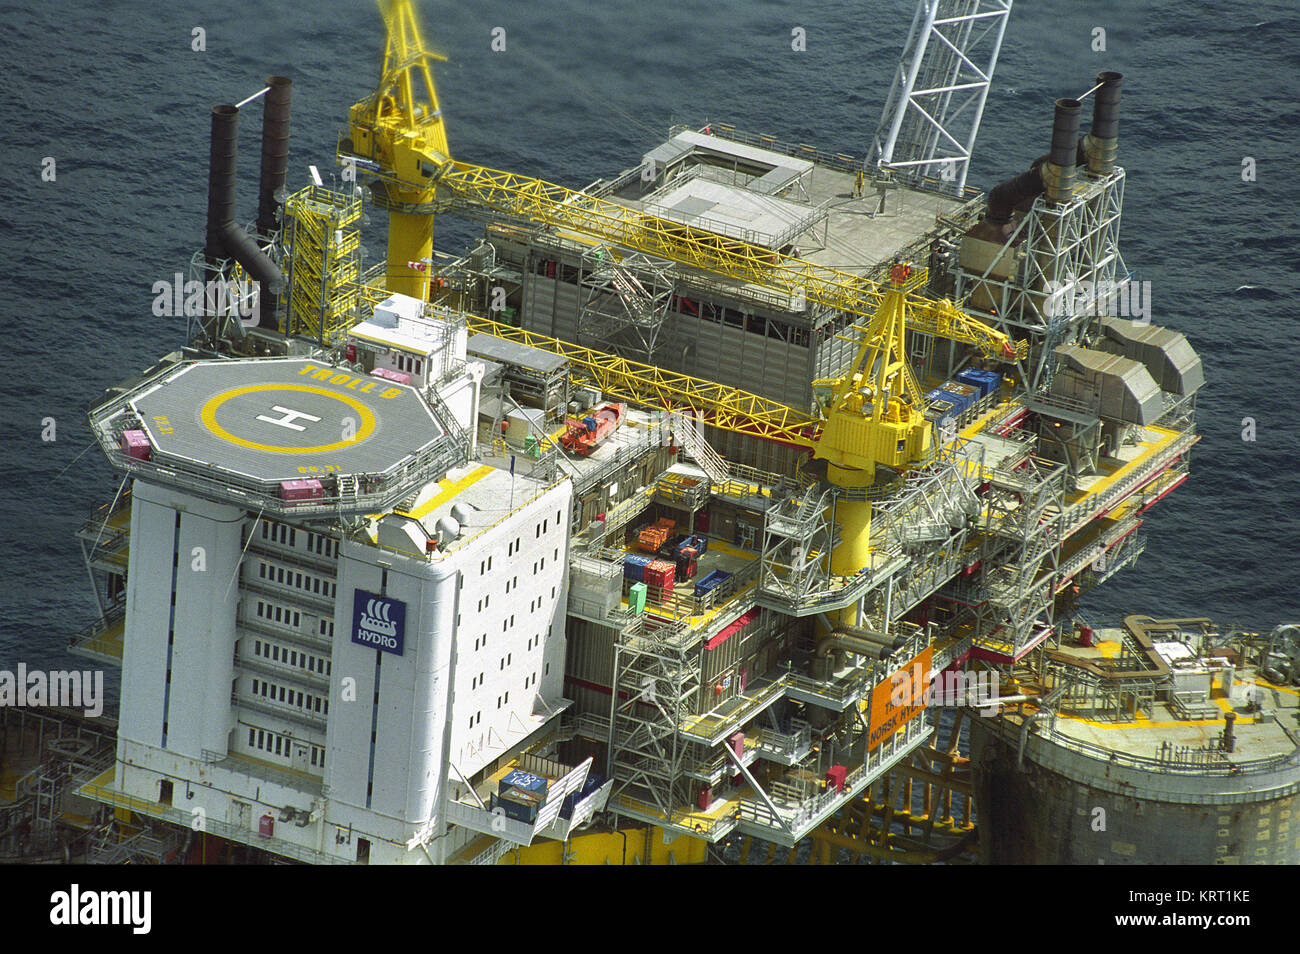 Nordsee, Öl Produktion mit Plattformen. Luftaufnahme. Stockfoto